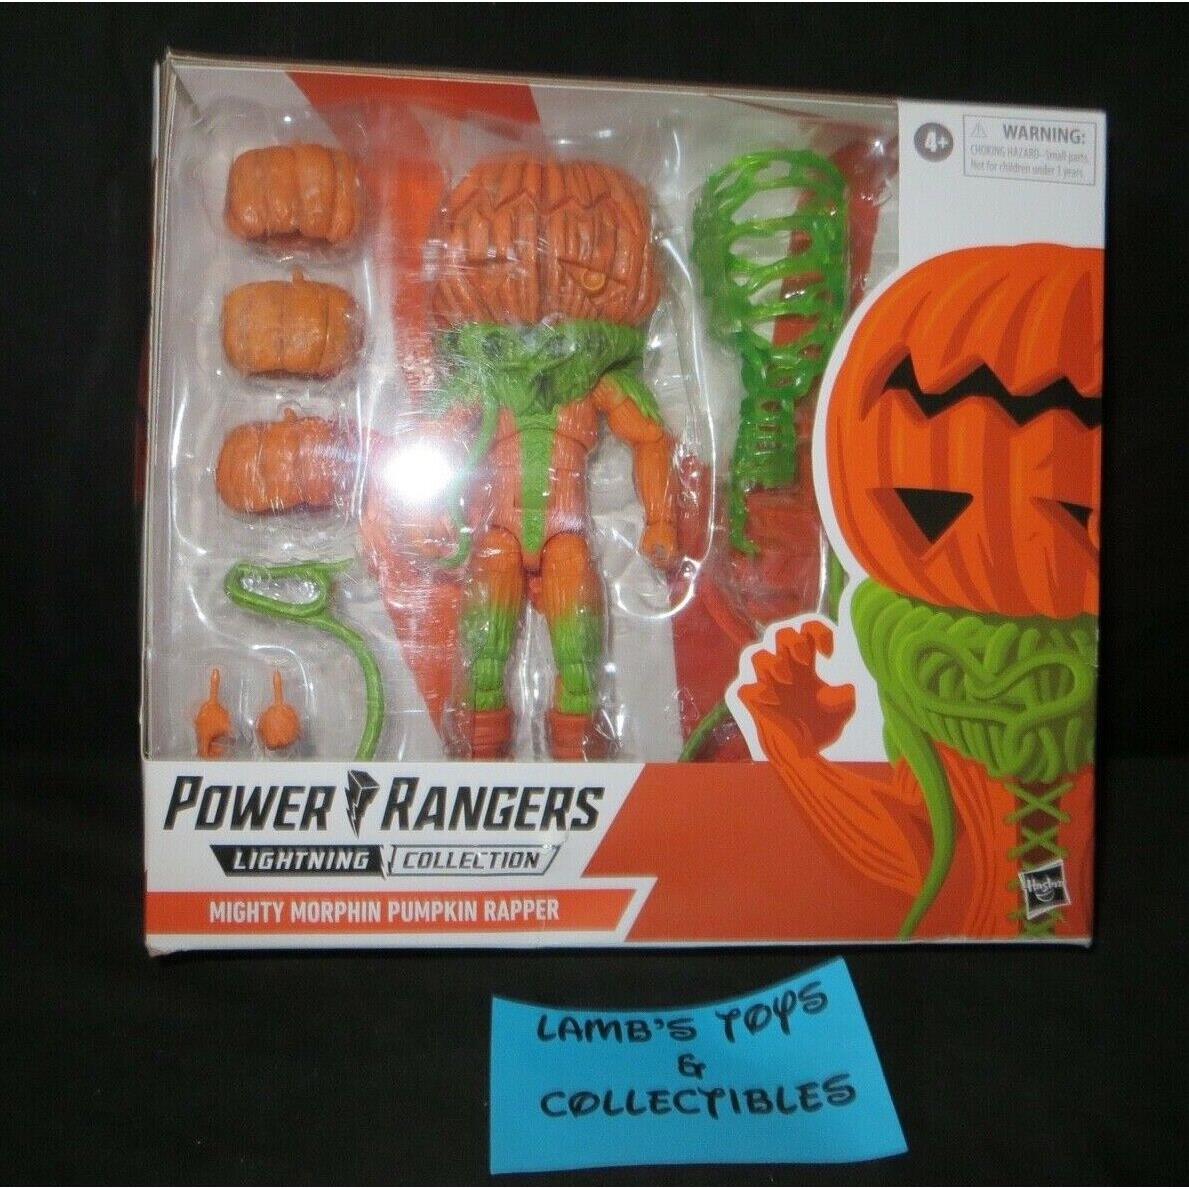 Power Rangers Lightning Collection Mighty Morphin Pumpkin Rapper 6 Figure Toy